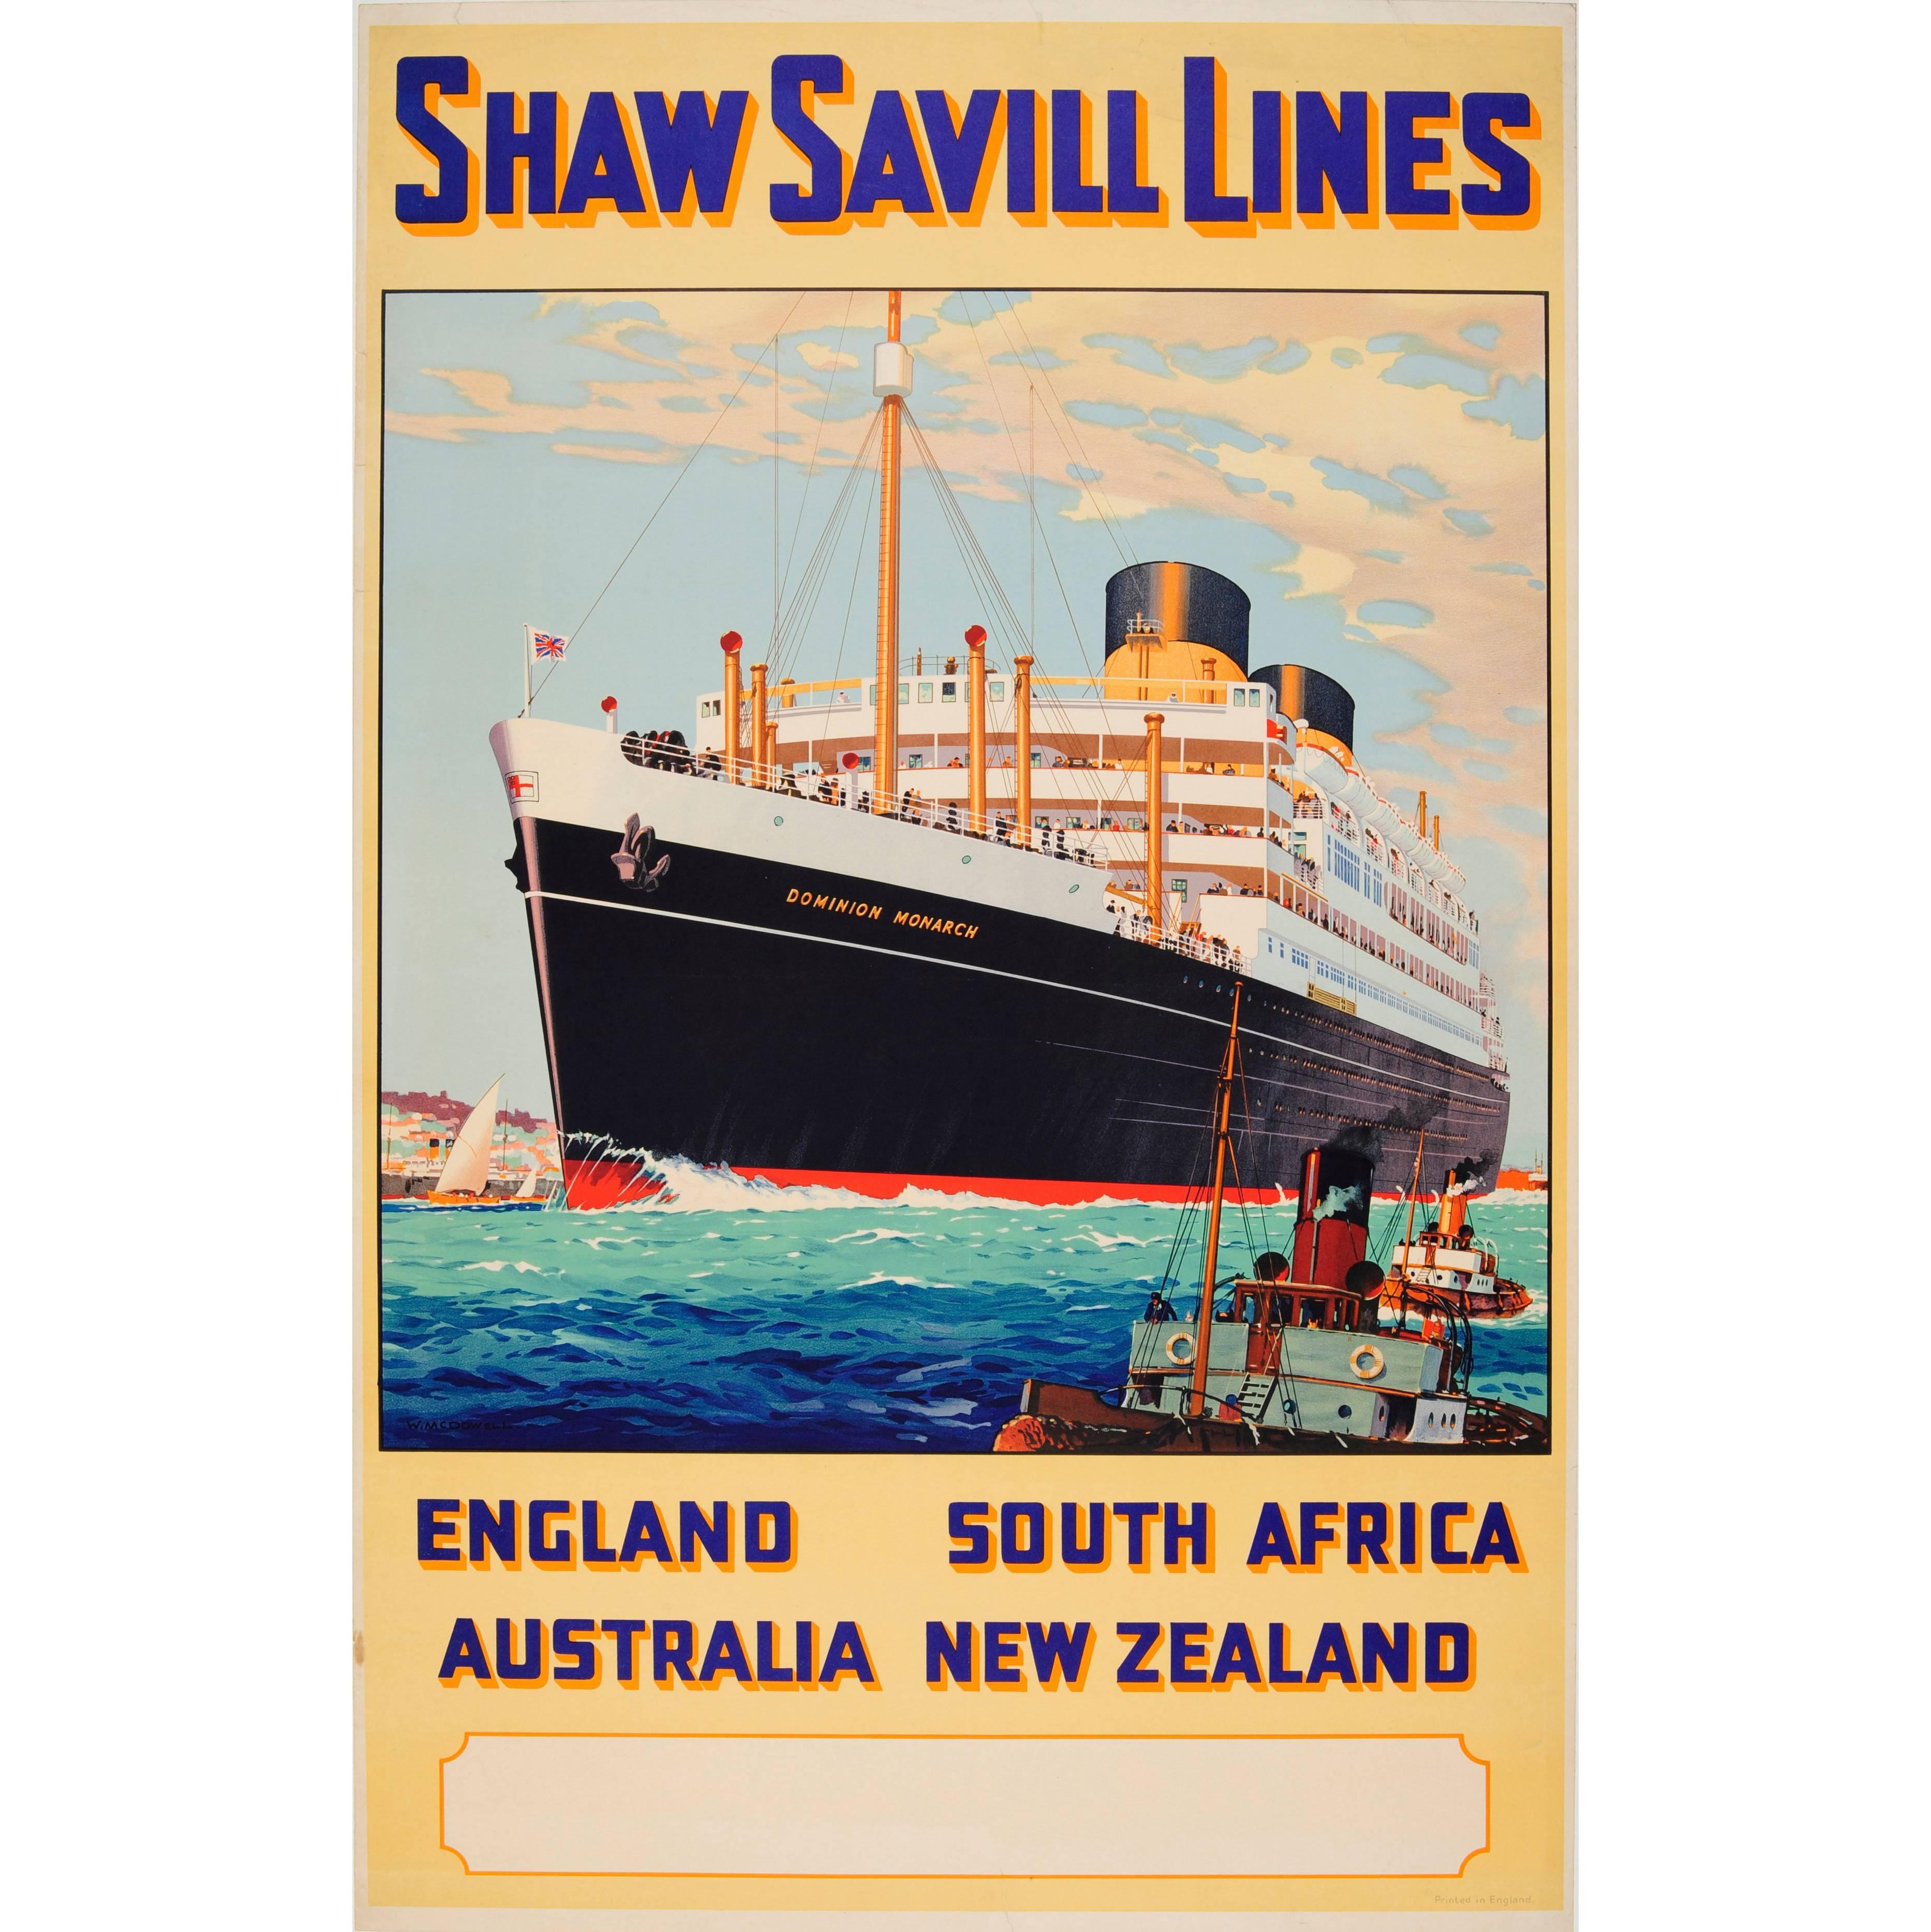 Original Shaw Savill Lines Poster for England South Africa Australia New Zealand